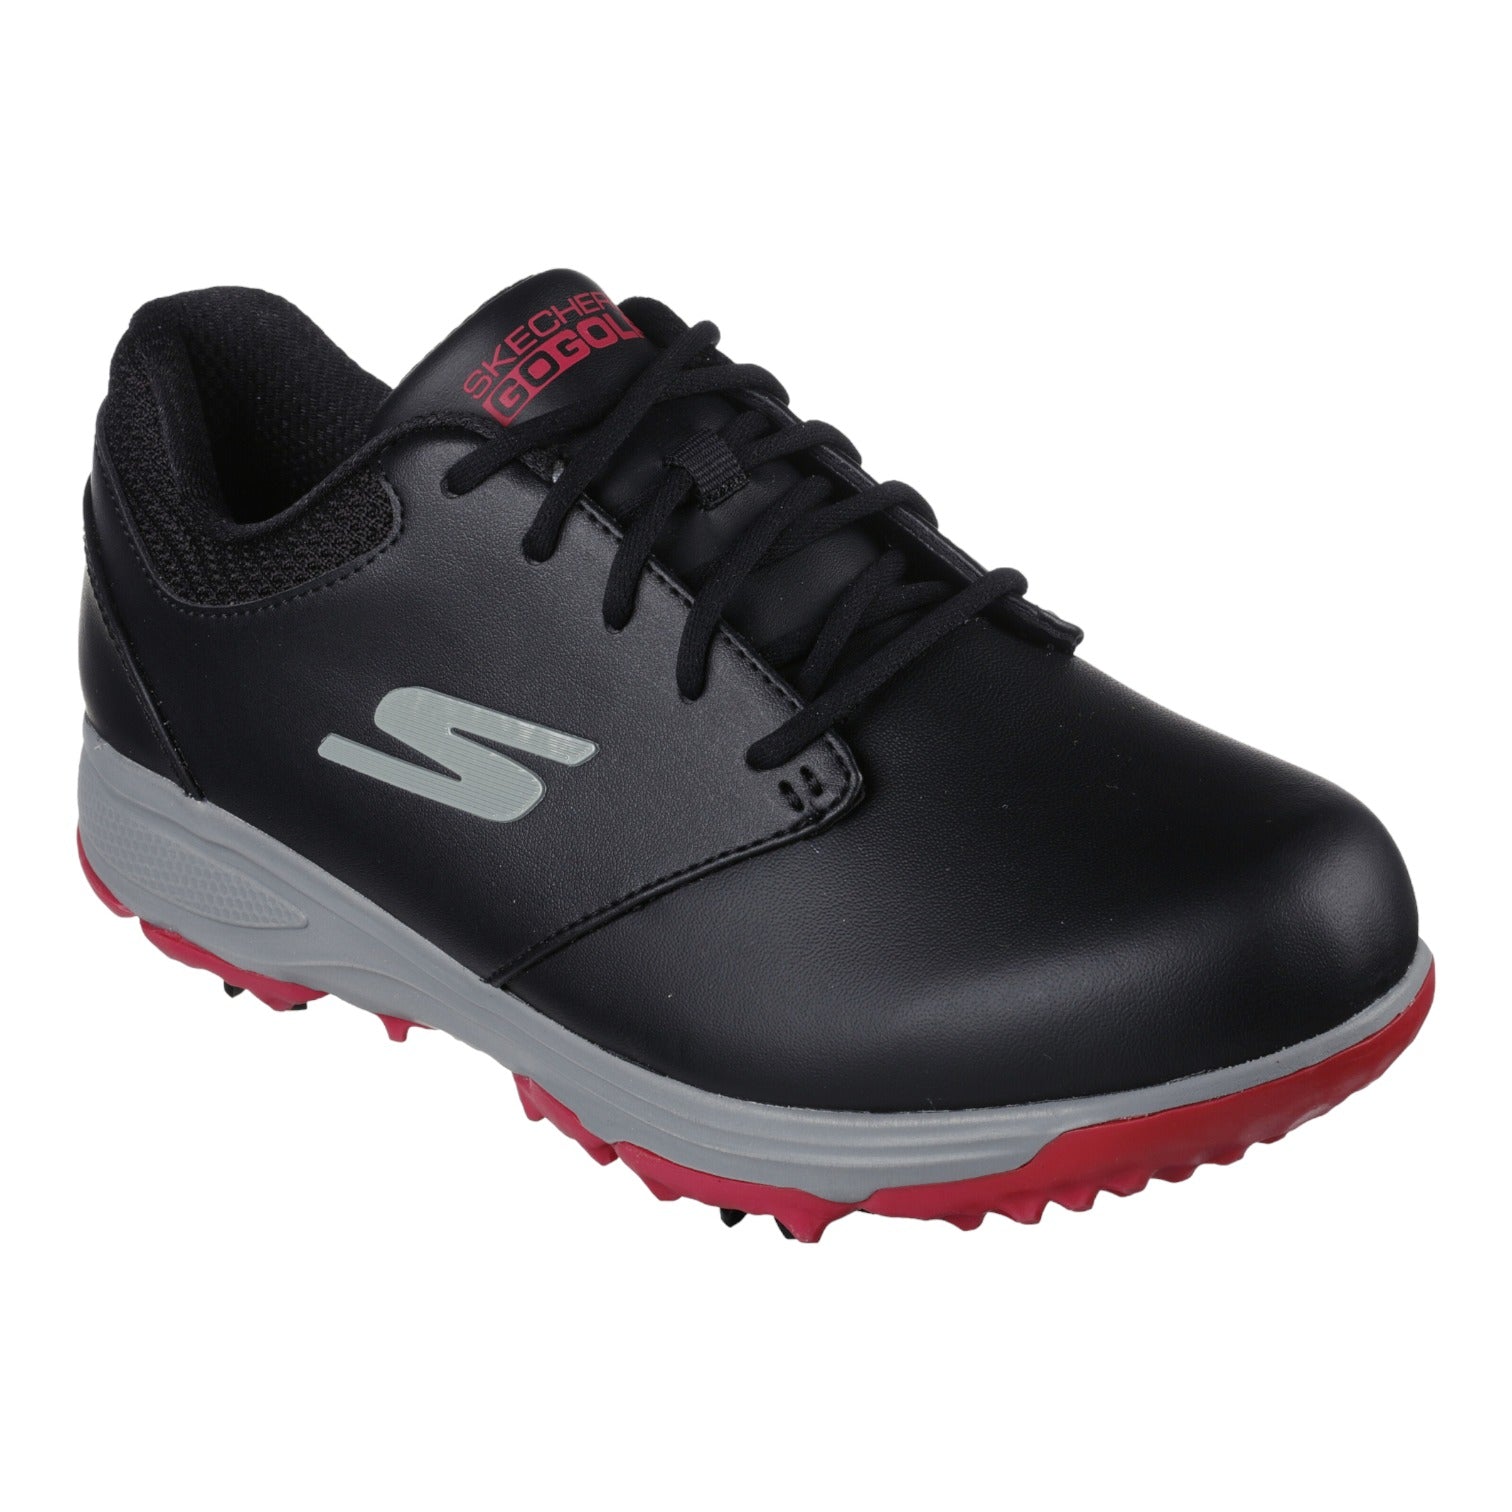 Skechers Ladies Go Golf Jasmine Golf Shoes 123050